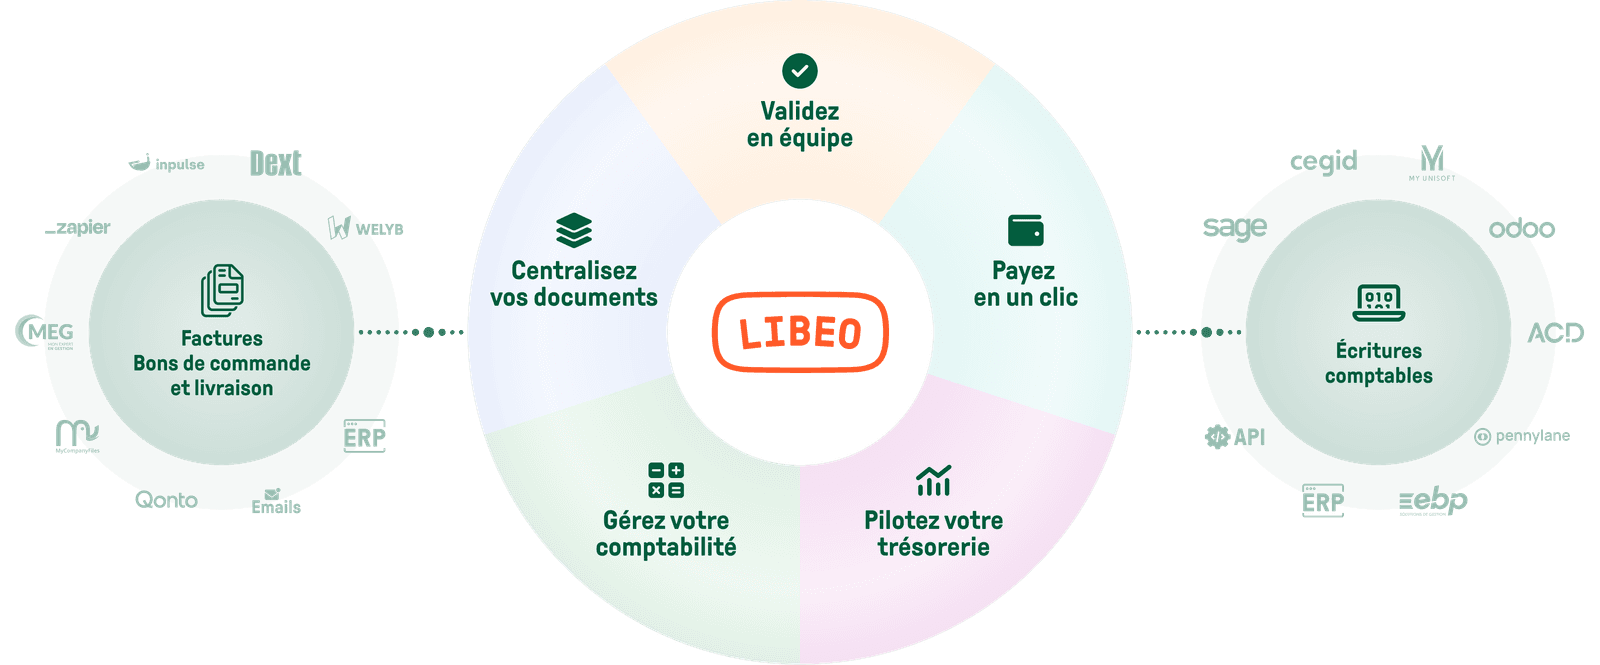 libeo-infography_horizontal